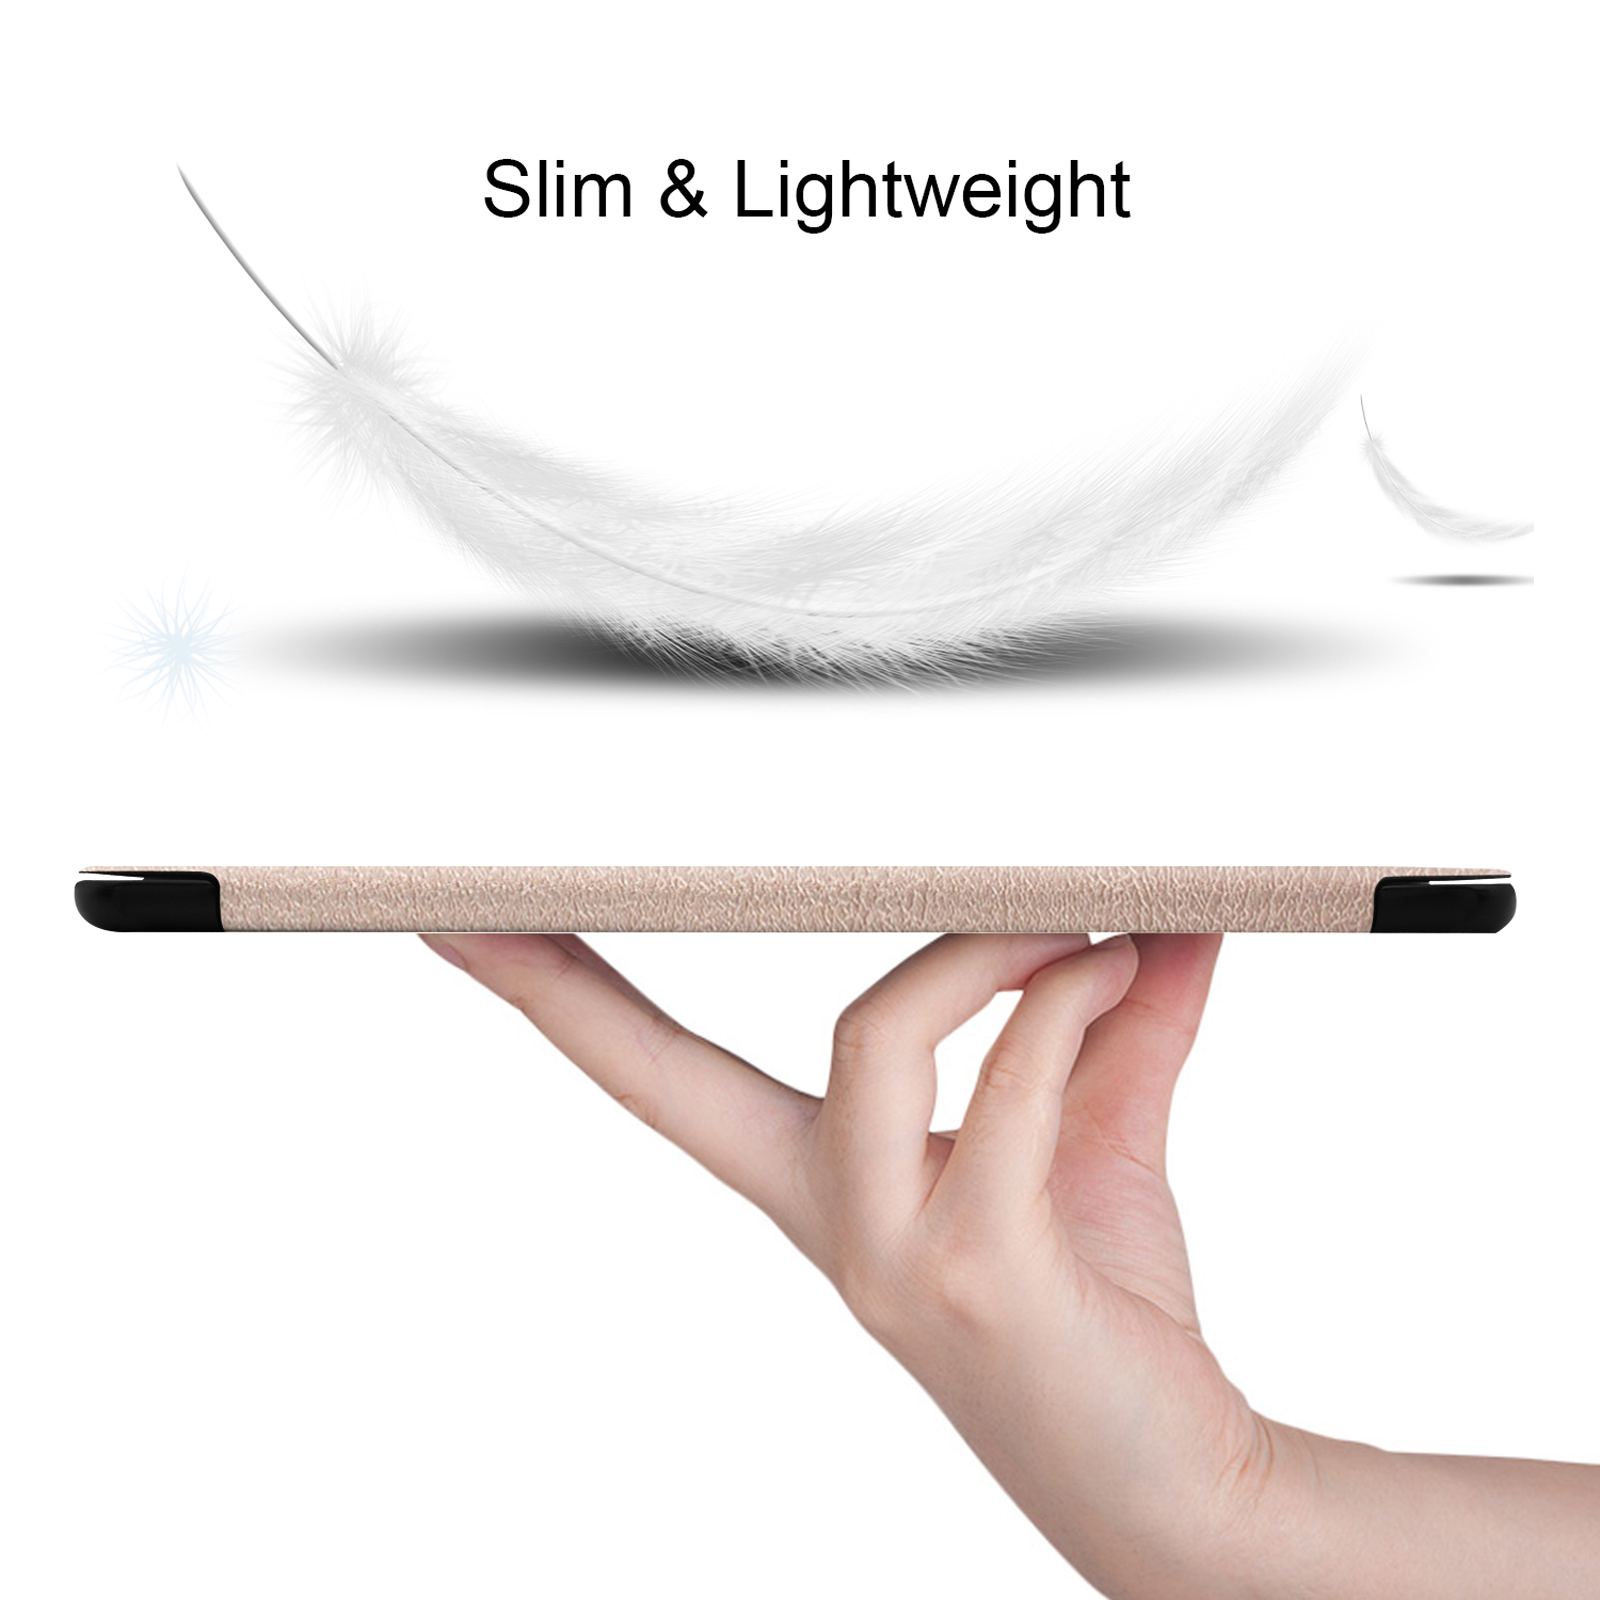 Galaxy Tab Schutzhülle 10.5 für SM-T720 Hülle S5e gold Bookcover Samsung Zoll LOBWERK Kunstleder,